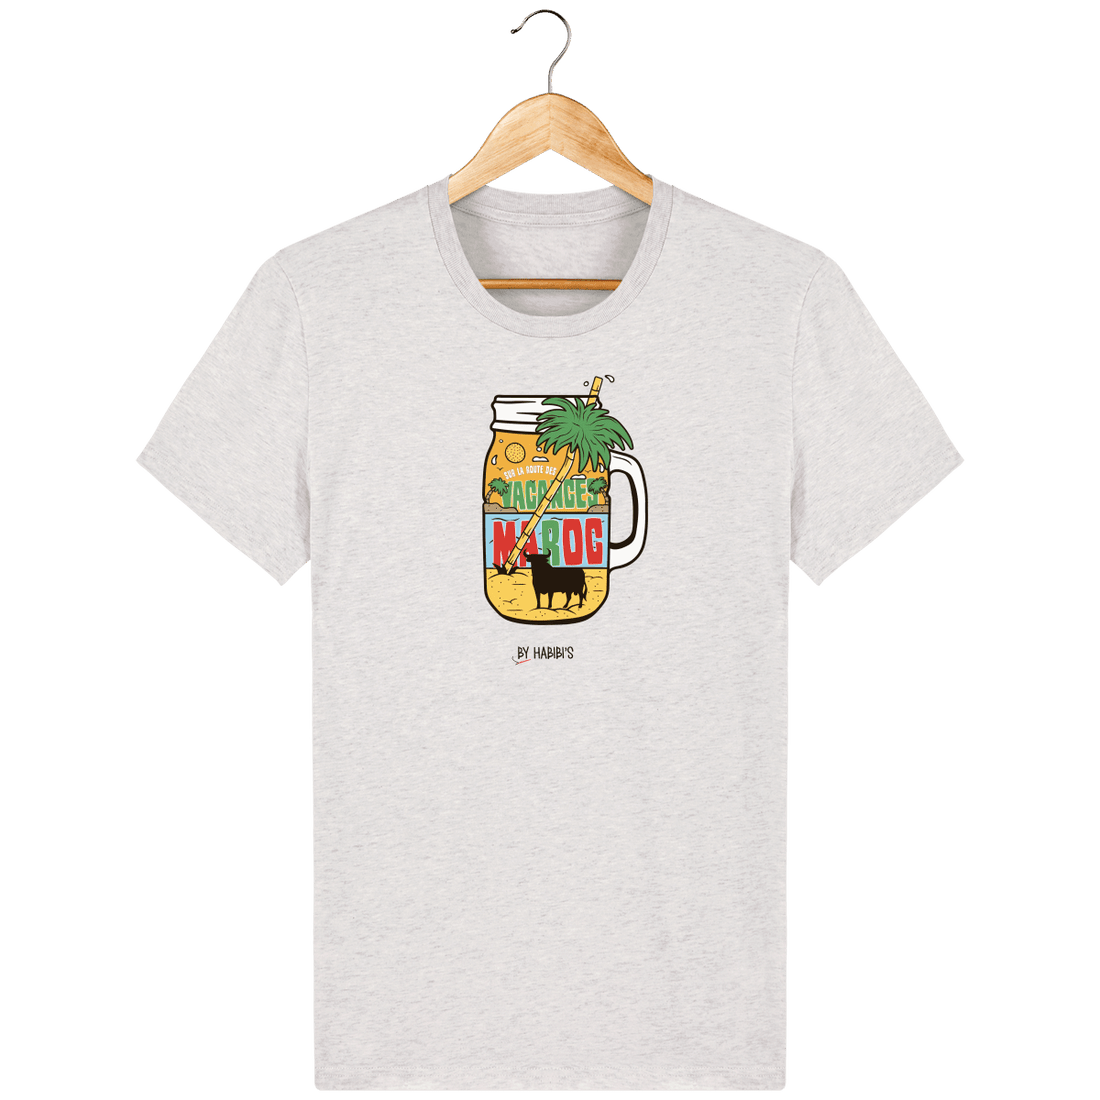 Unisexe>Tee-shirts - T-shirt Homme <br> Été Maroc